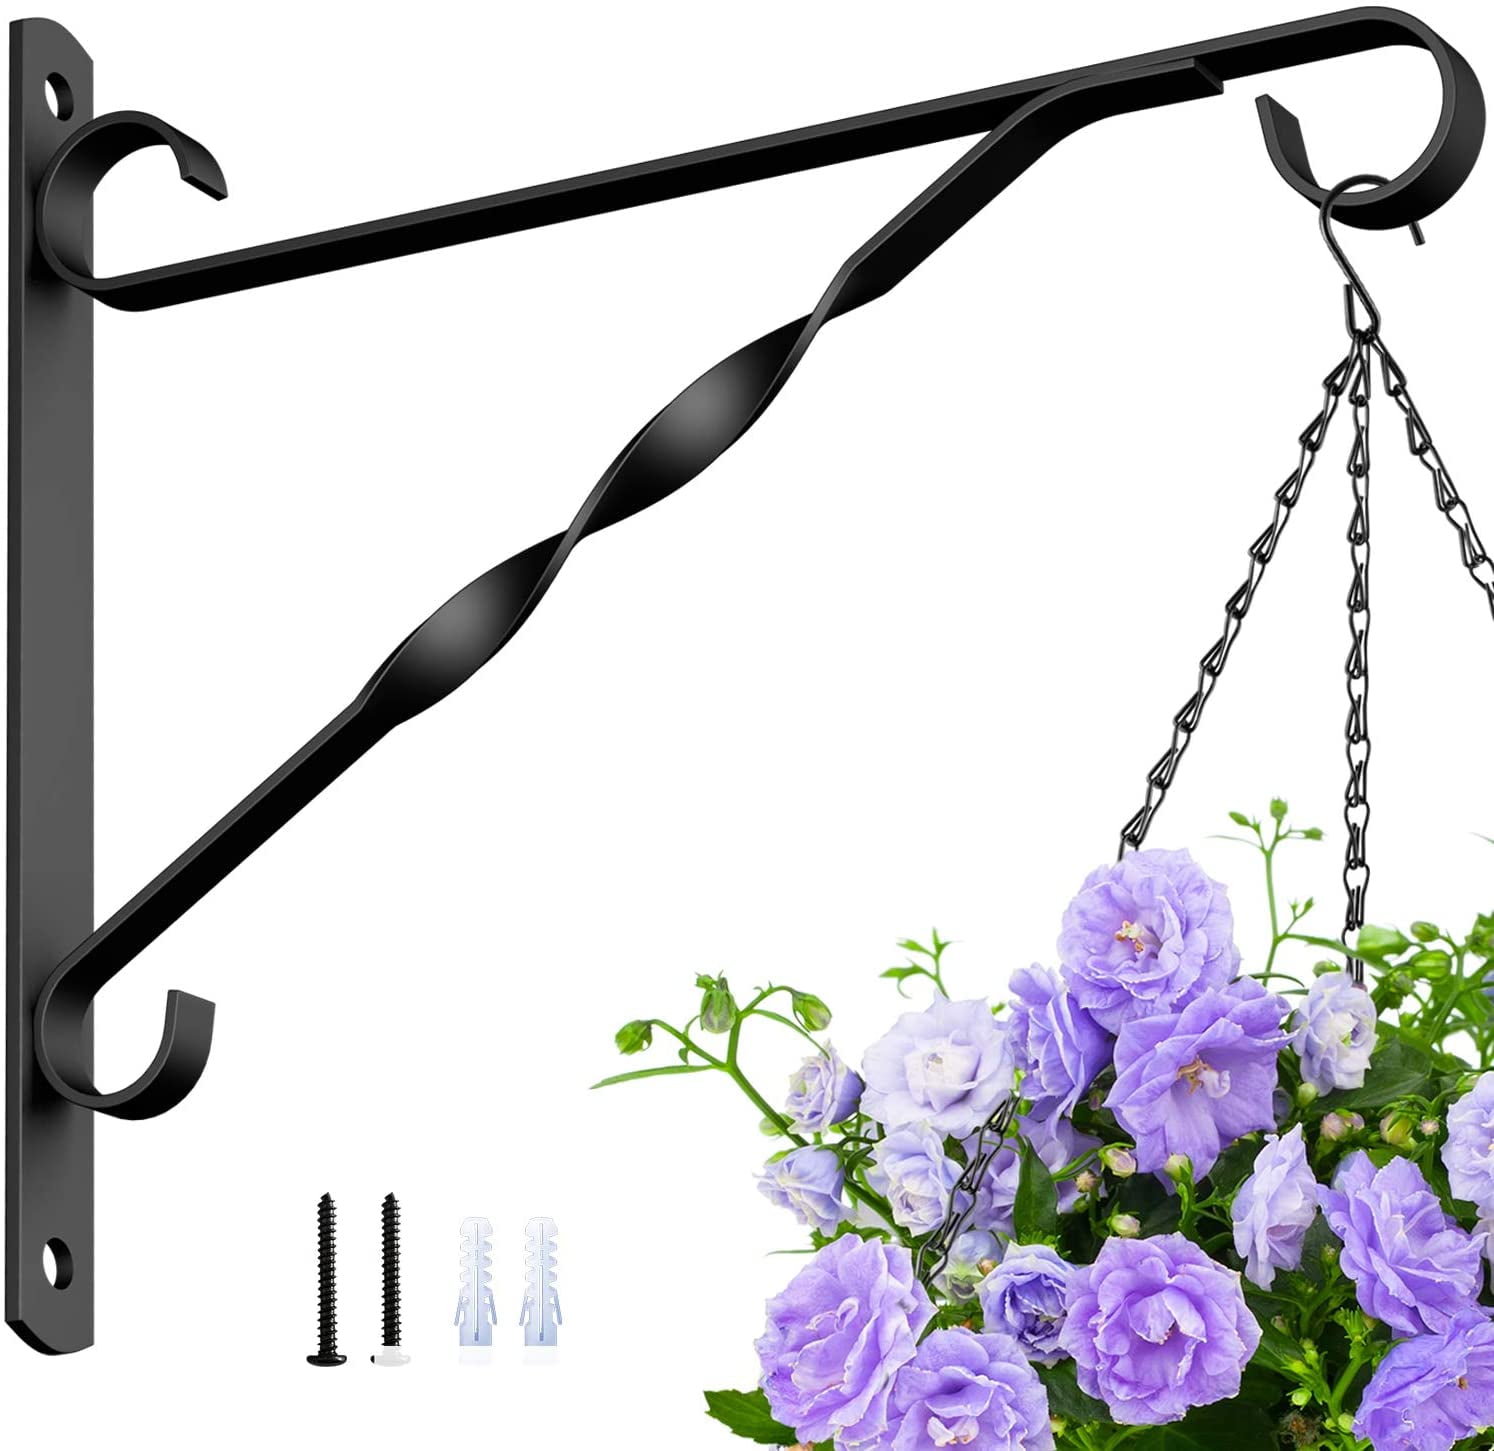 Details about   x2 Hanging Planter Bracket Black Metal 9” Wall Hook Flower Basket Garden Depot 